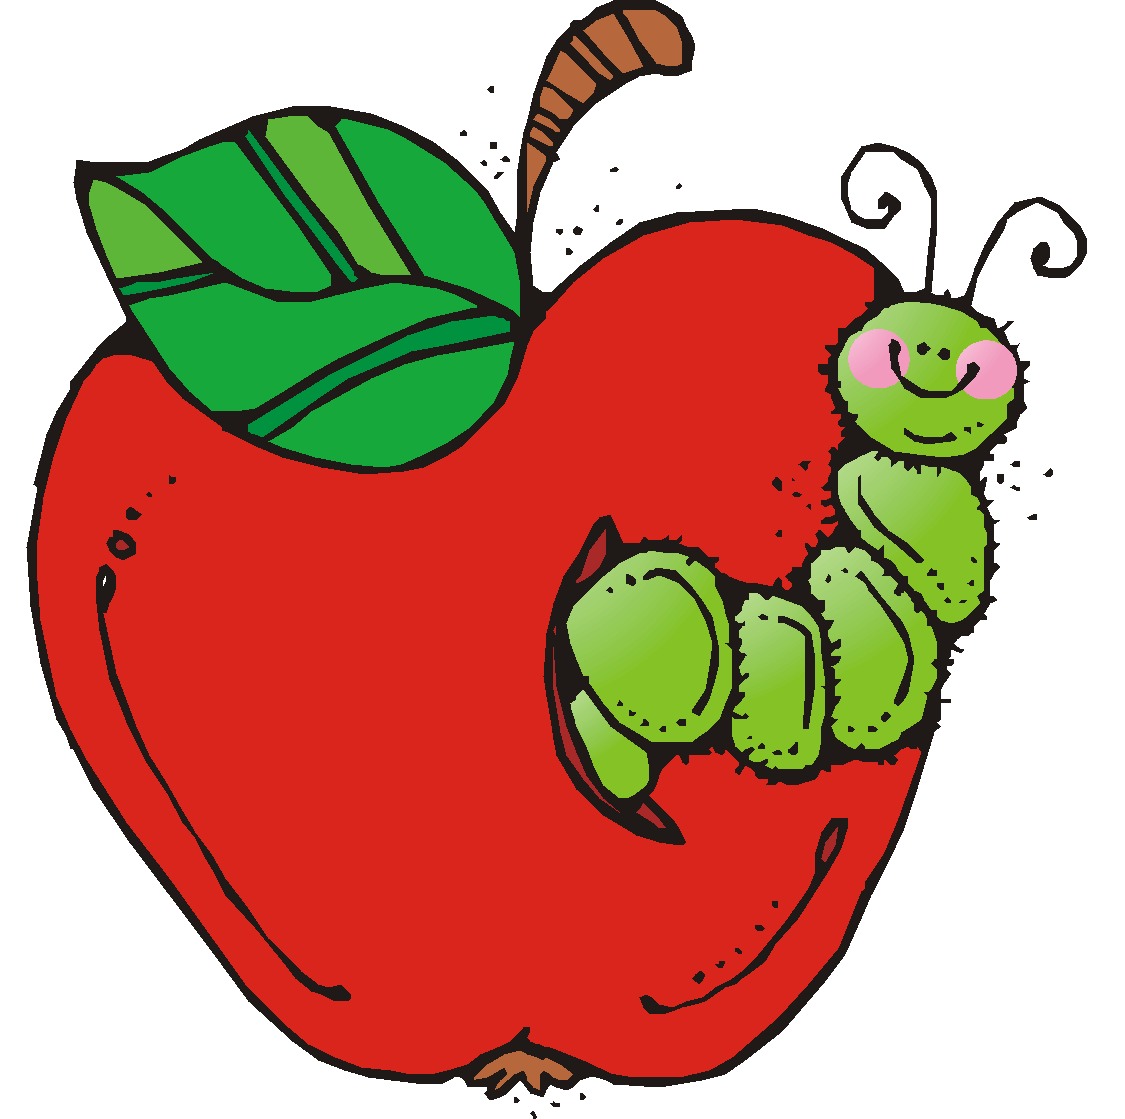 Teachers Cartoon Apple - ClipArt Best - Cliparts.co - The Cliparts